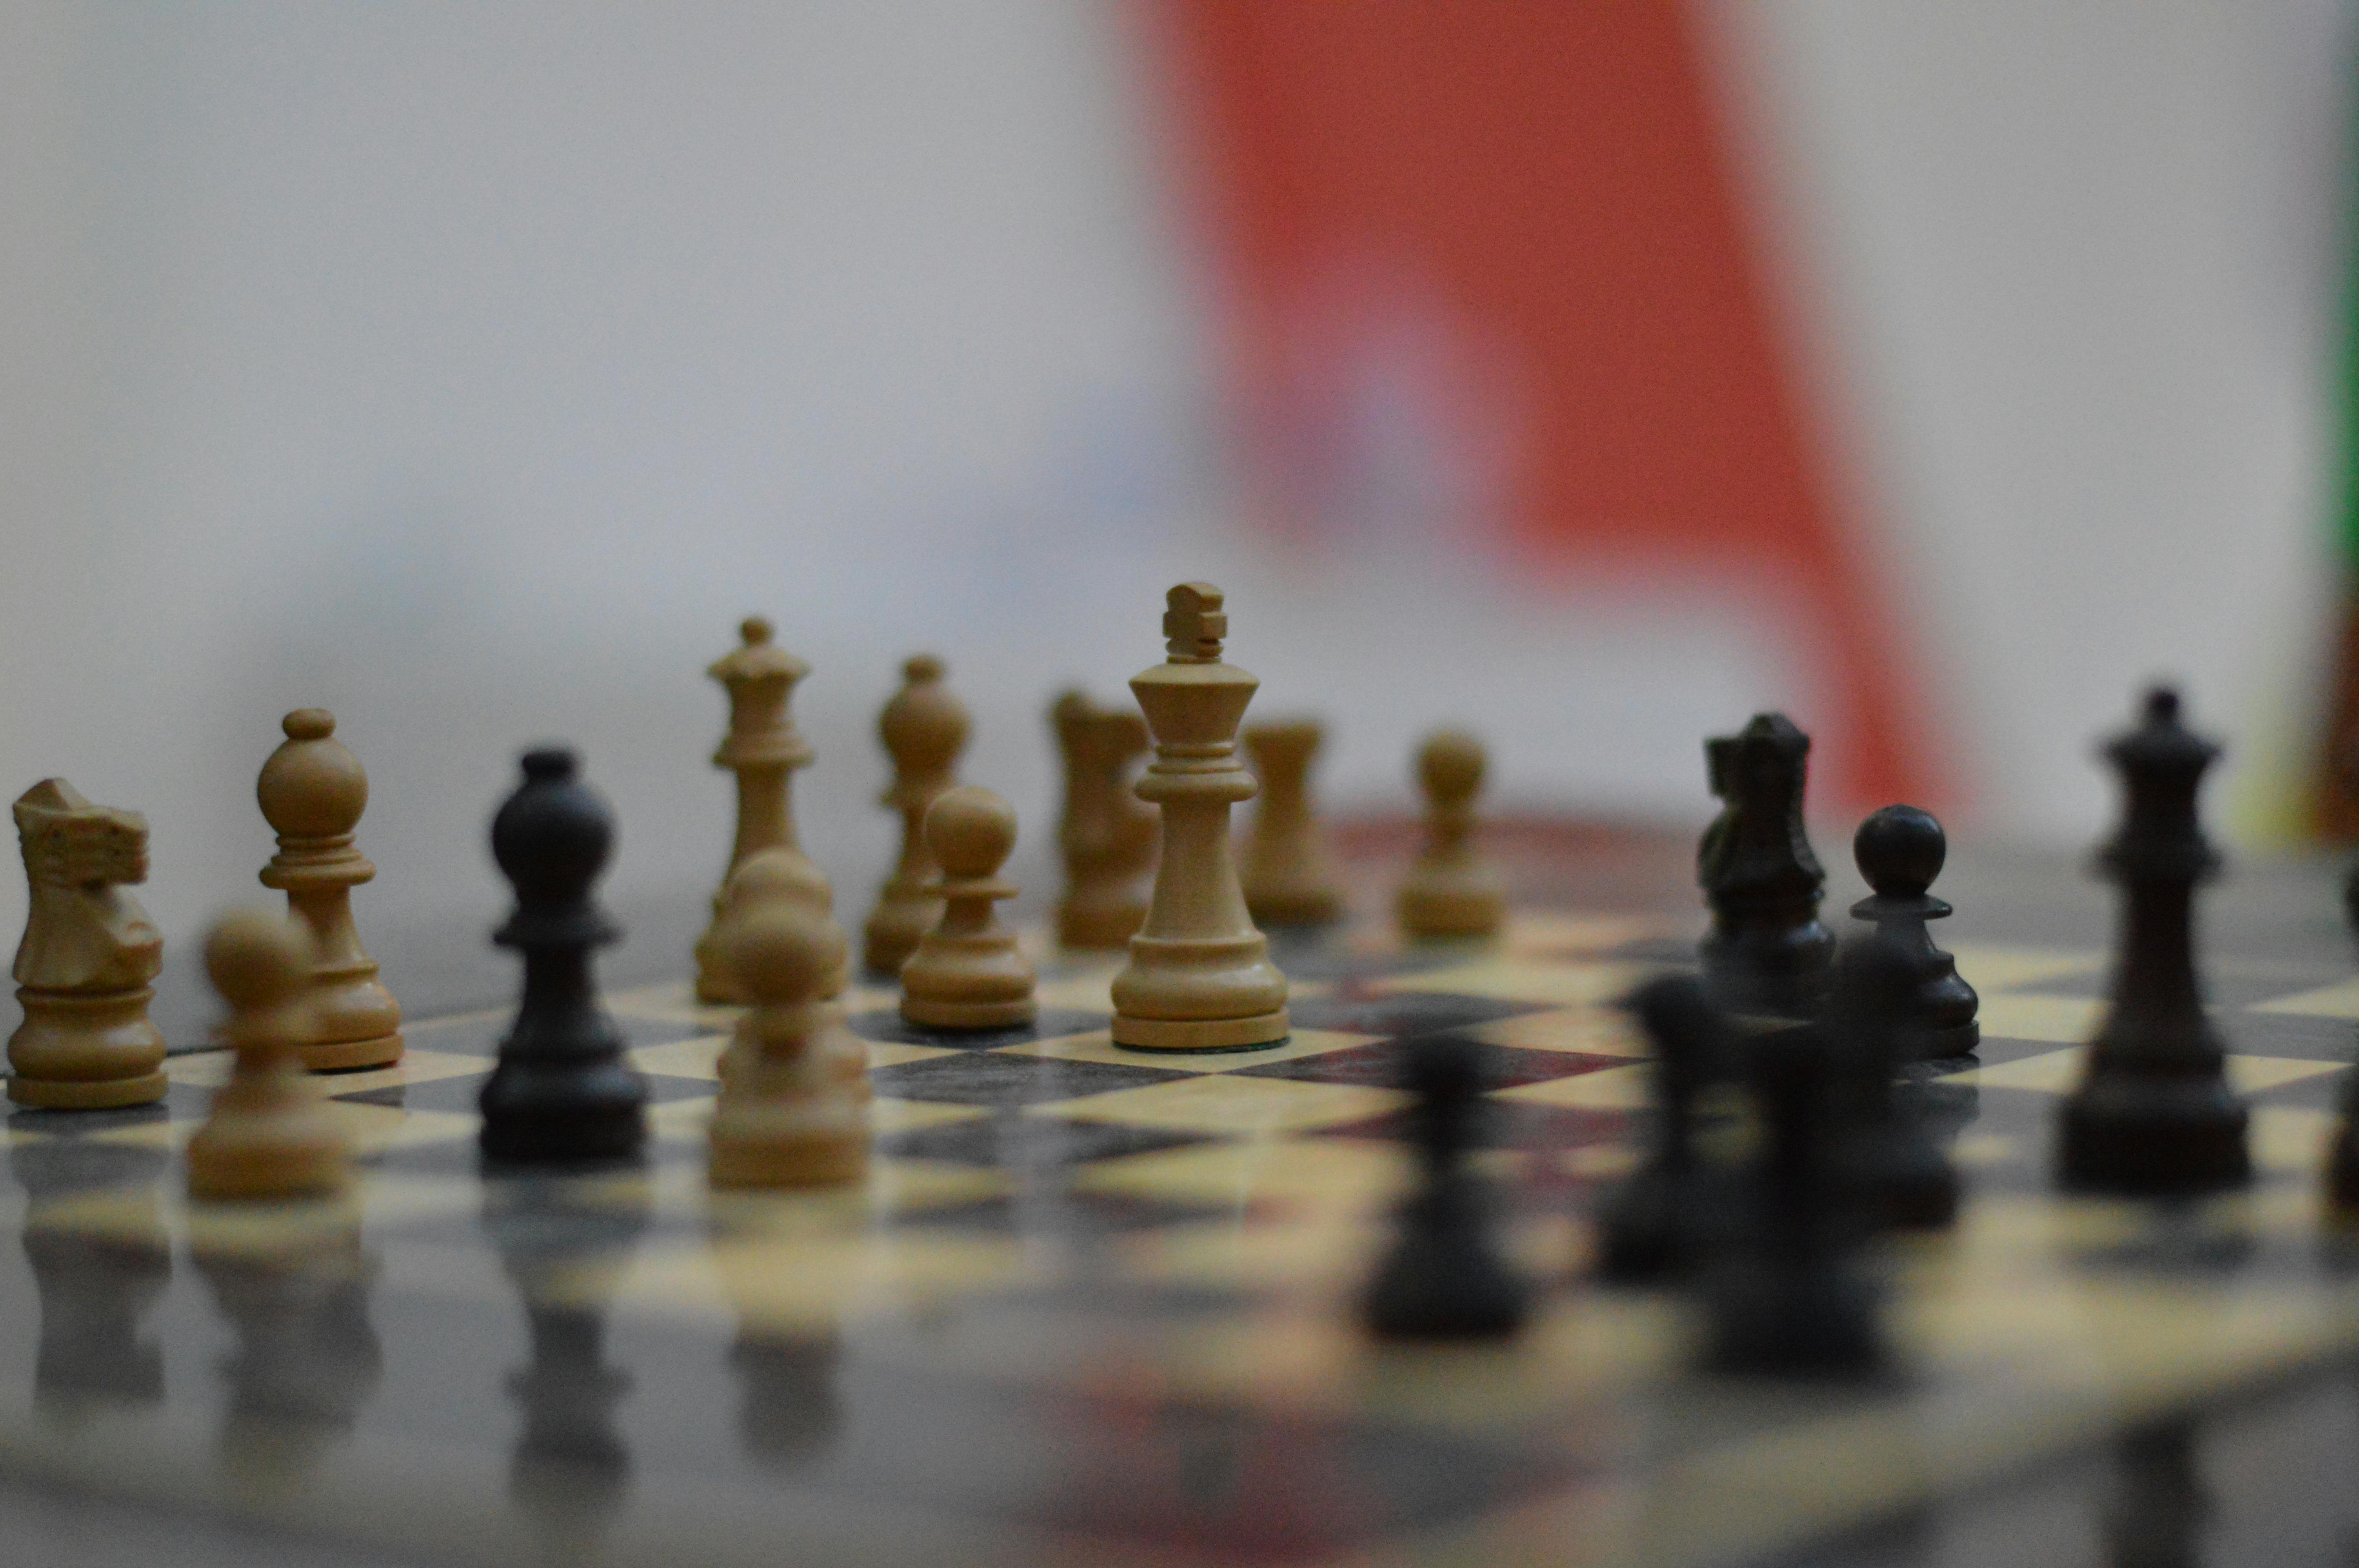 Free stock photo of #Chess #Mekarfest